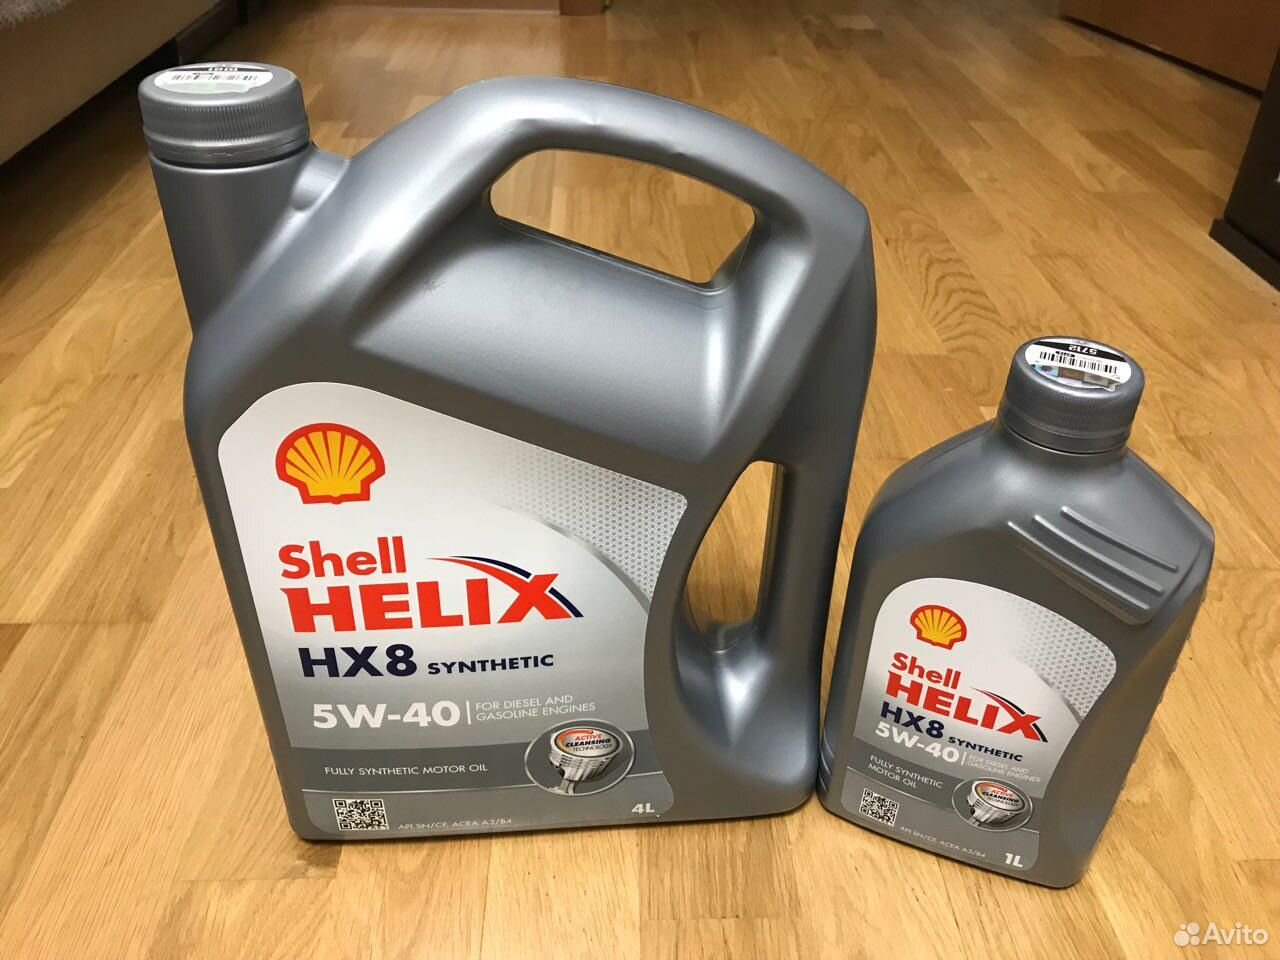 Shell Helix hx8 Synthetic 5w-40.